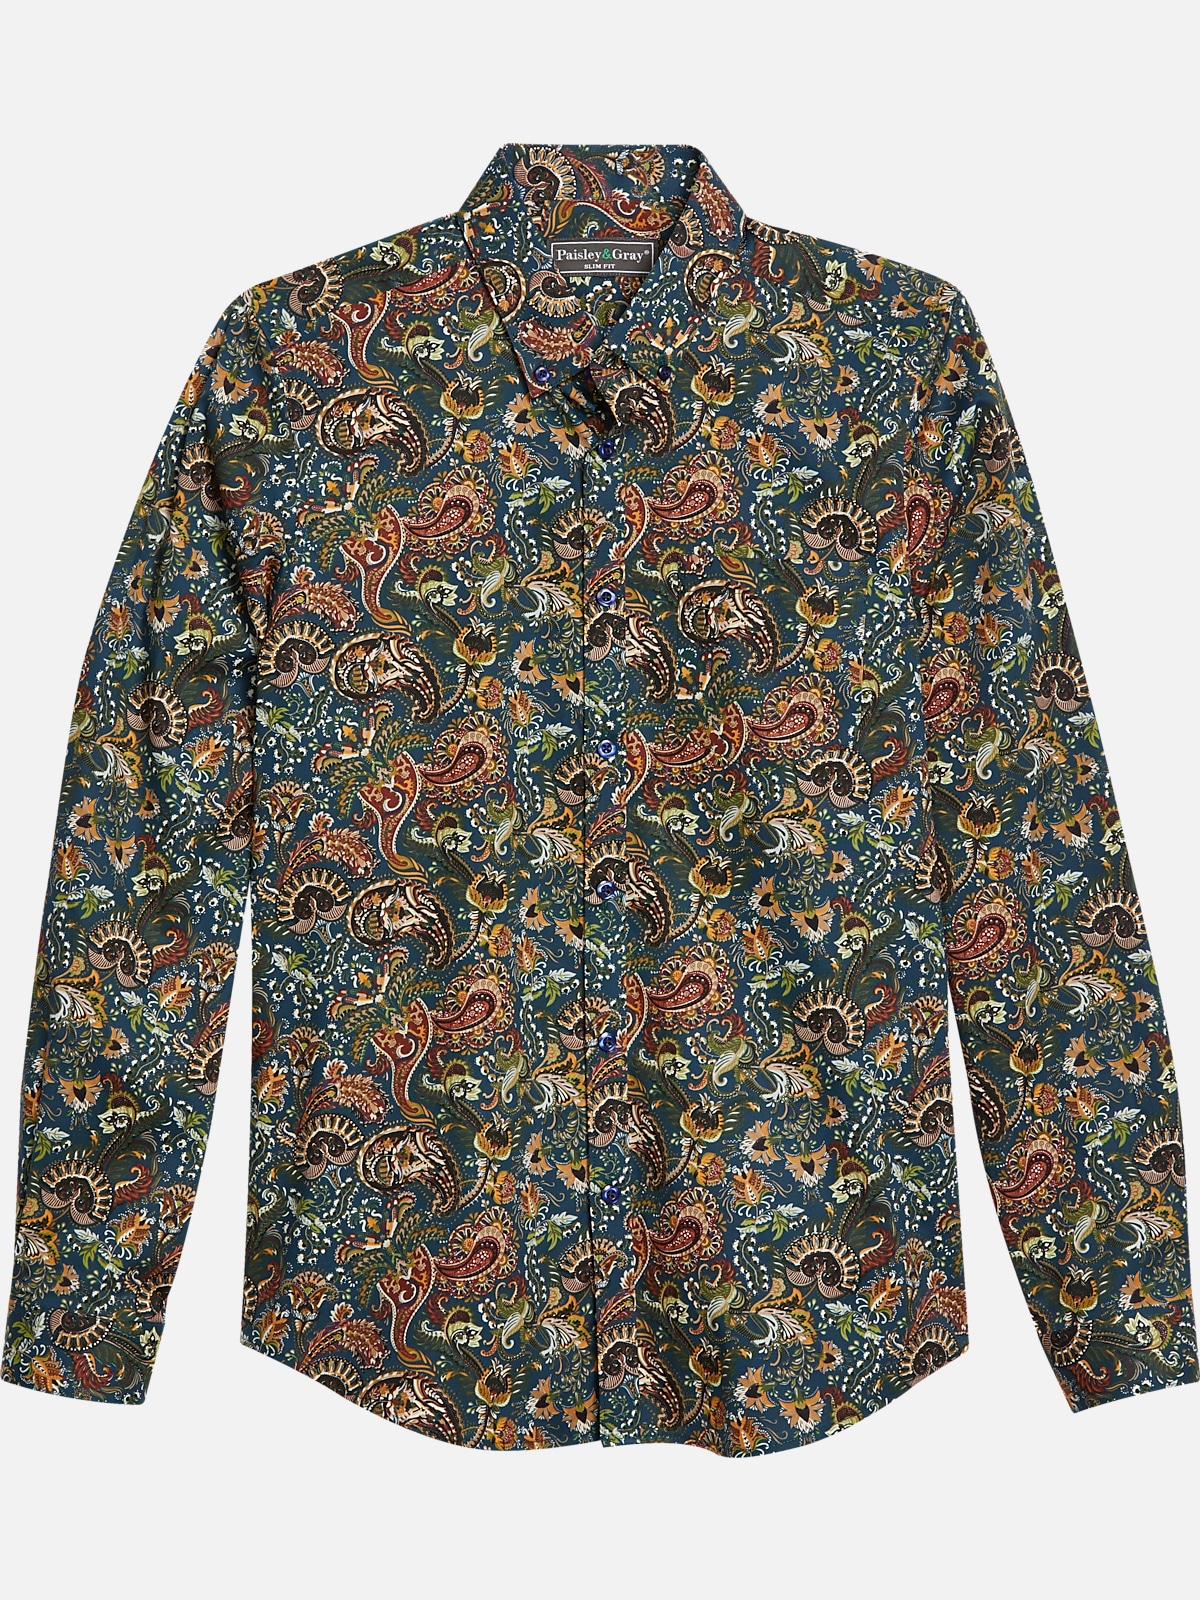 Paisley & Gray Slim Fit Sport Shirt | The Casual Shop| Men's Wearhouse